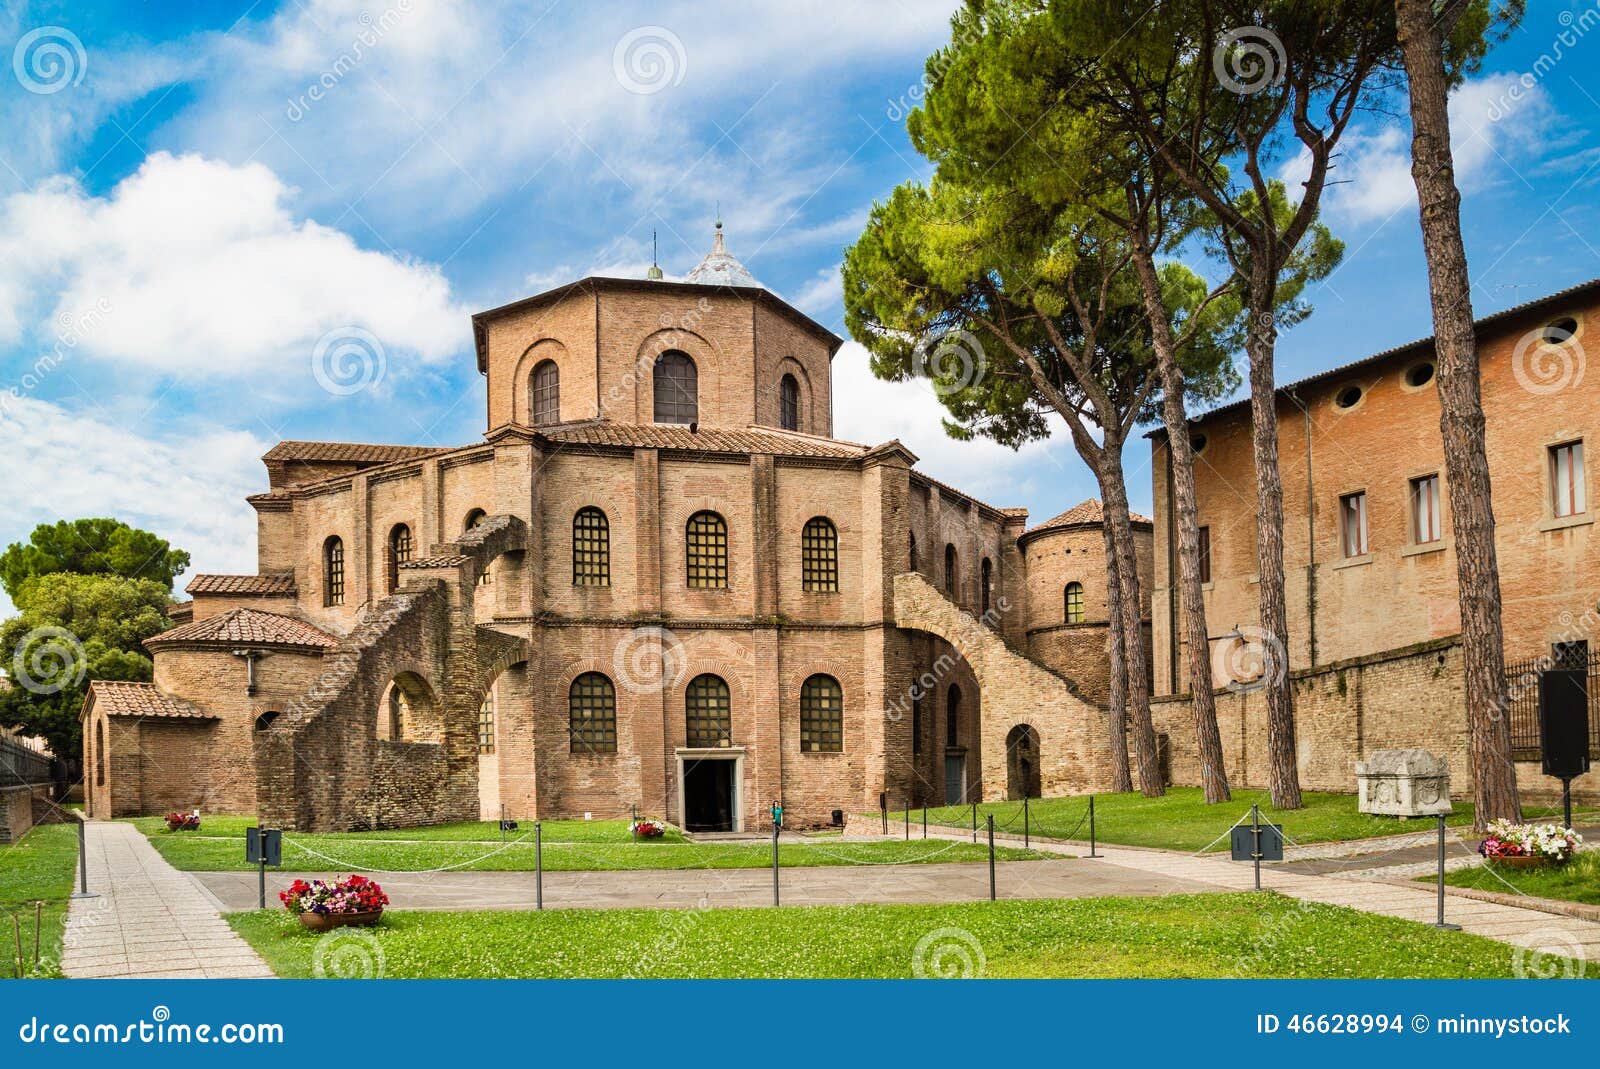 basilica di san vitale in ravenna, italy